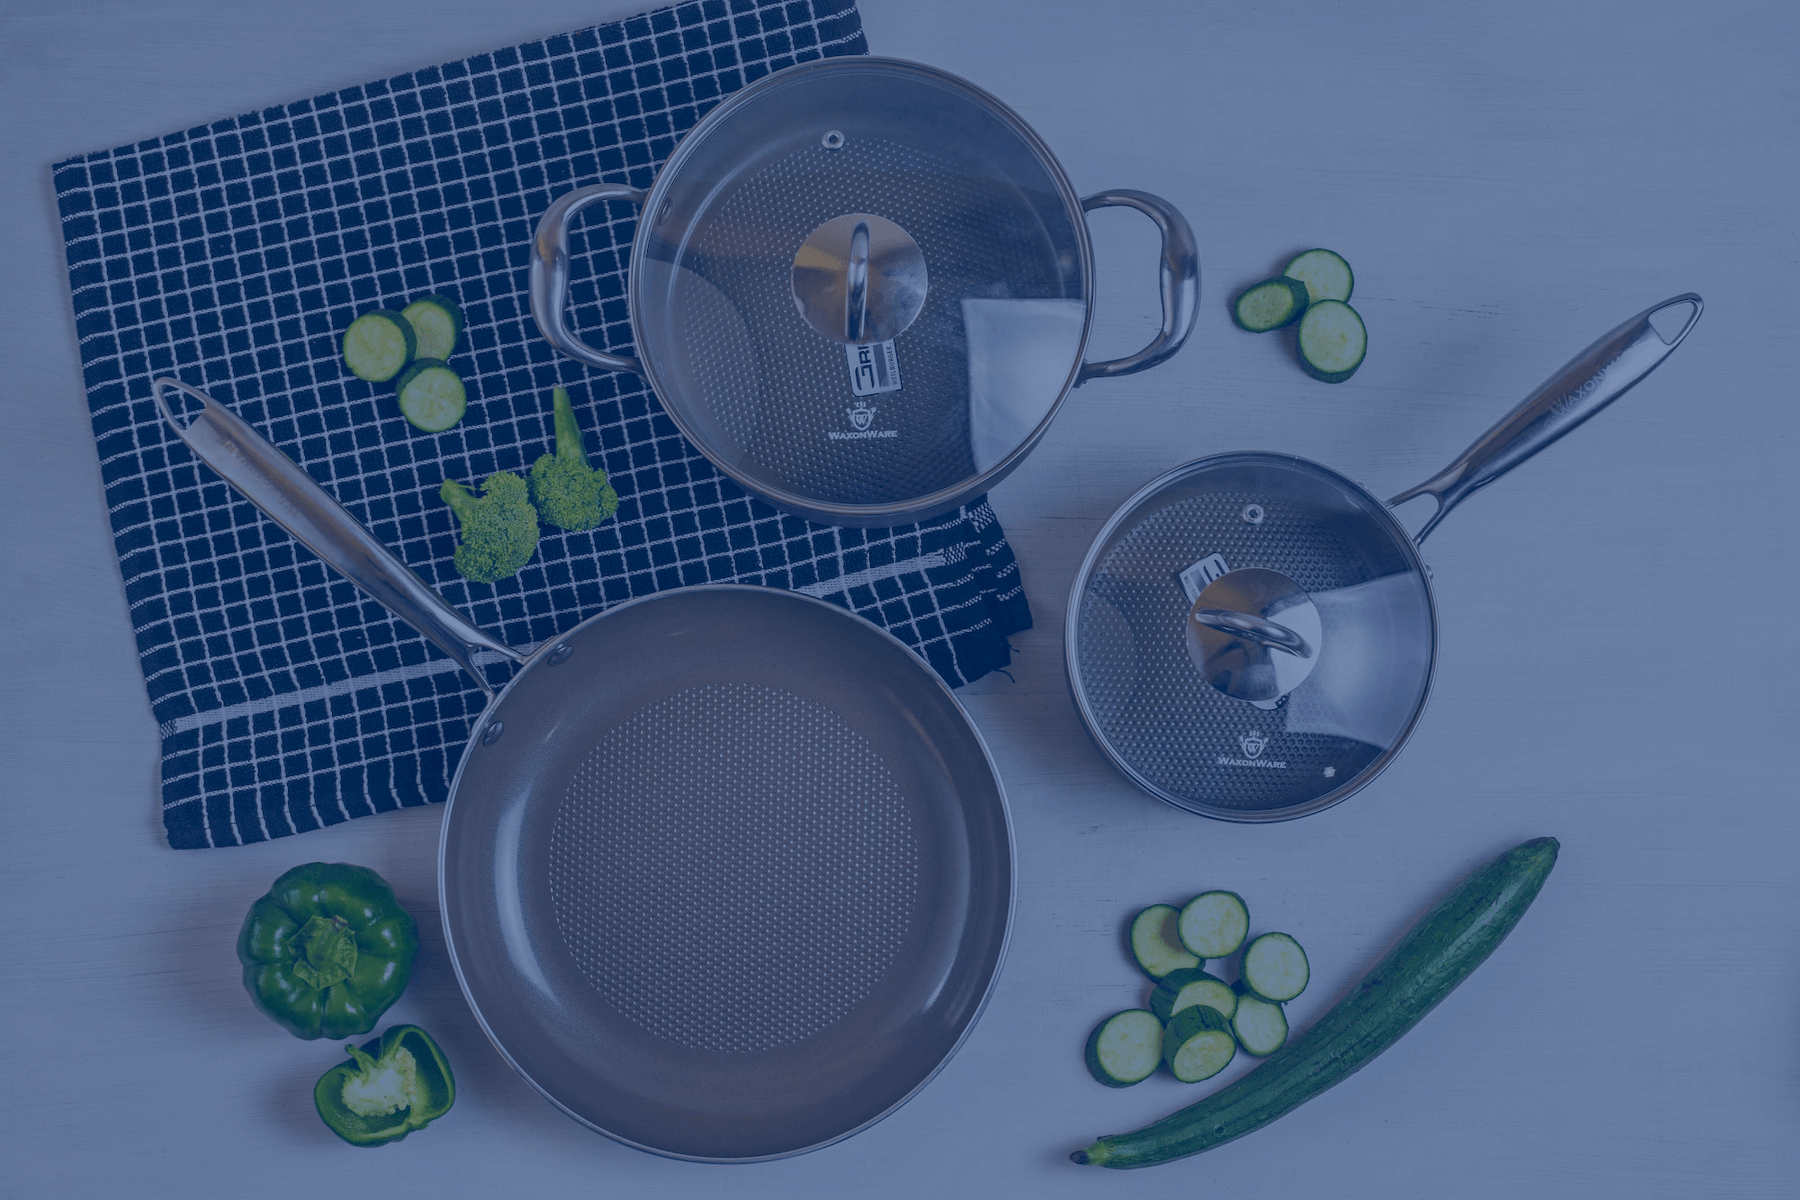 Hive 5 Piece Non-Stick Cookware Set – WaxonWare